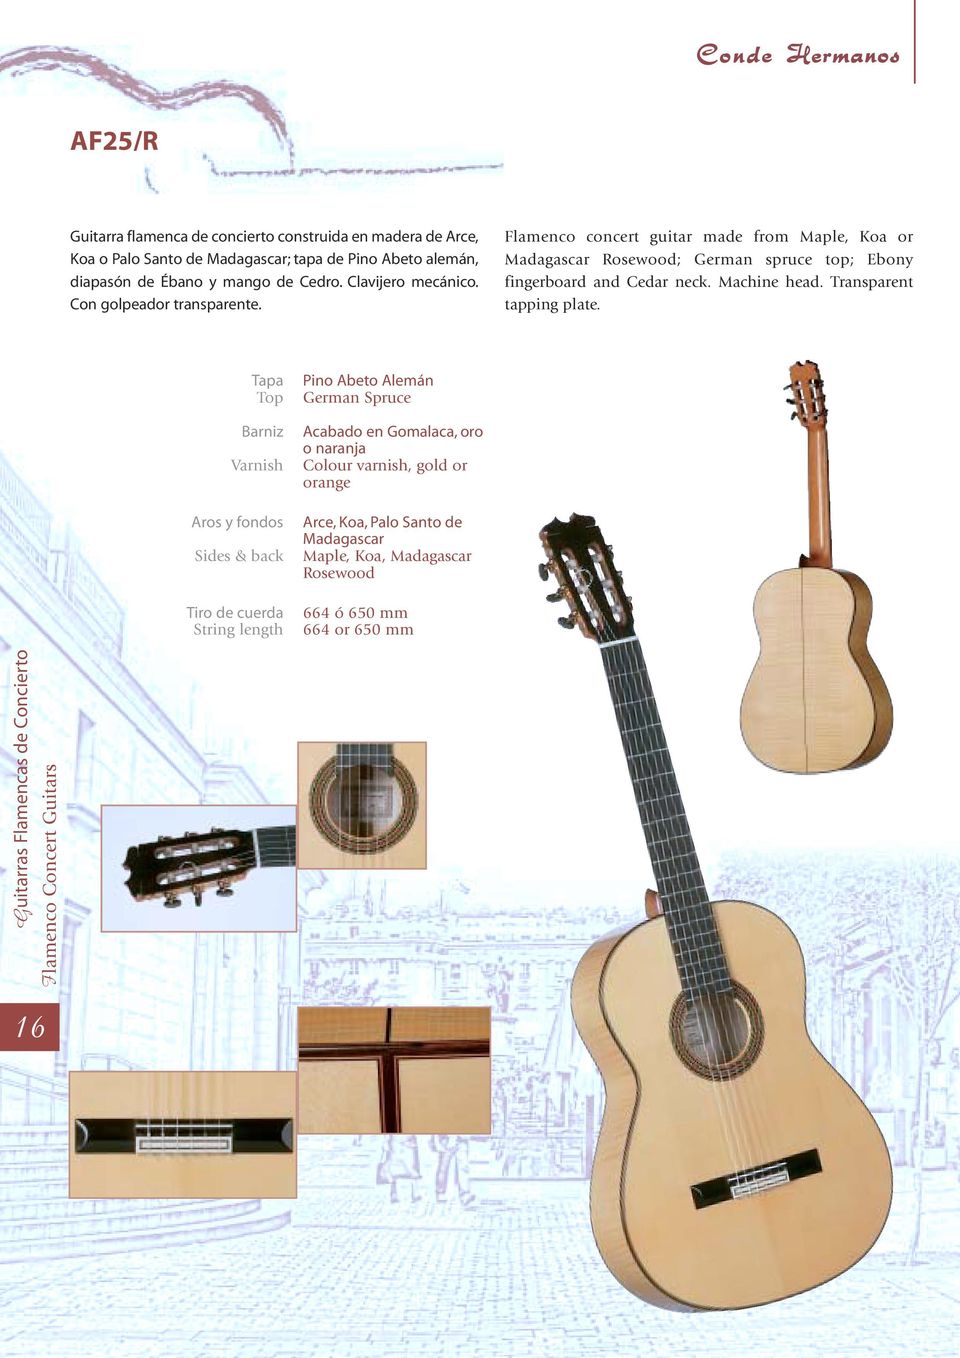 Flamenco concert guitar made from Maple, Koa or Madagascar Rosewood; German spruce top; Ebony fingerboard and Cedar neck. Machine head.